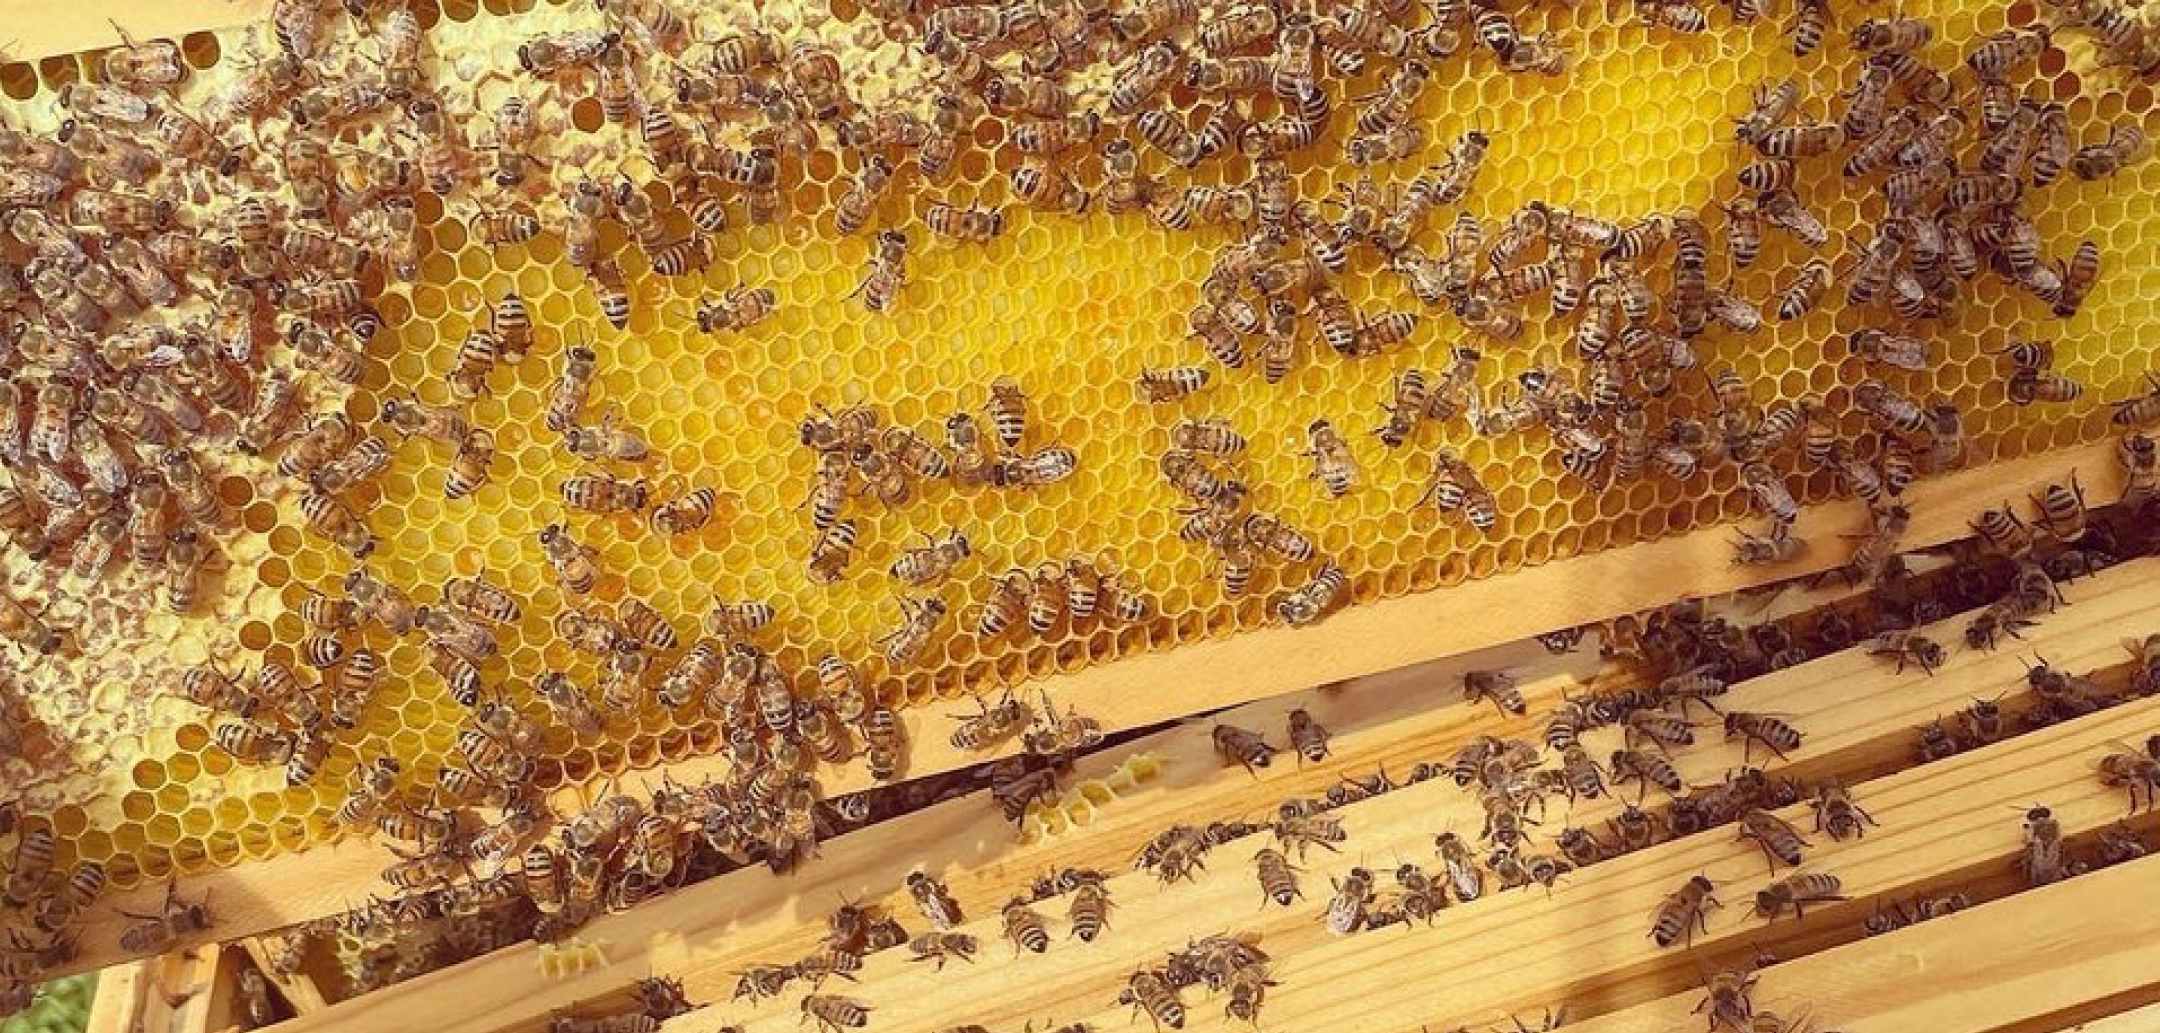 The Little Farm Apiary - Honey Bees